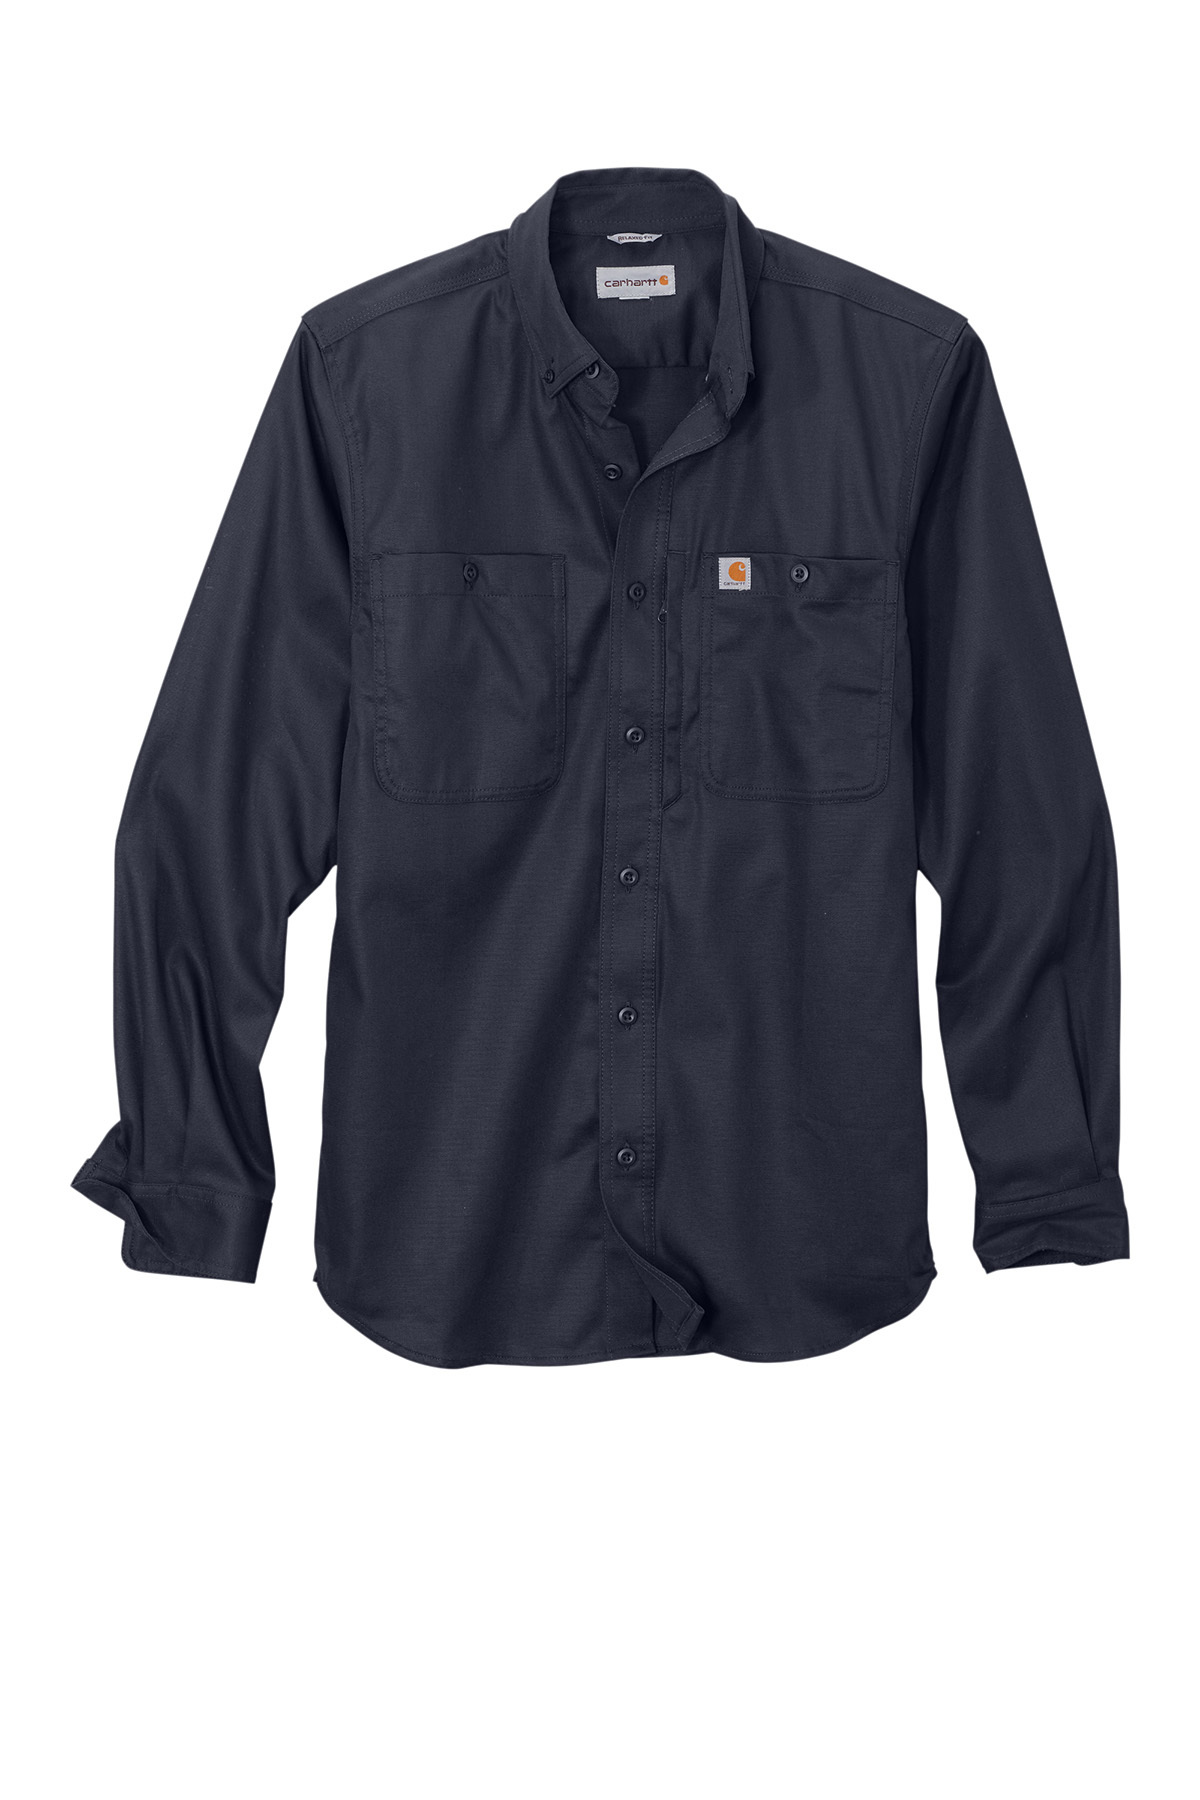 Carhartt Rugged Professional Series Long Sleeve Shirt | Product | SanMar